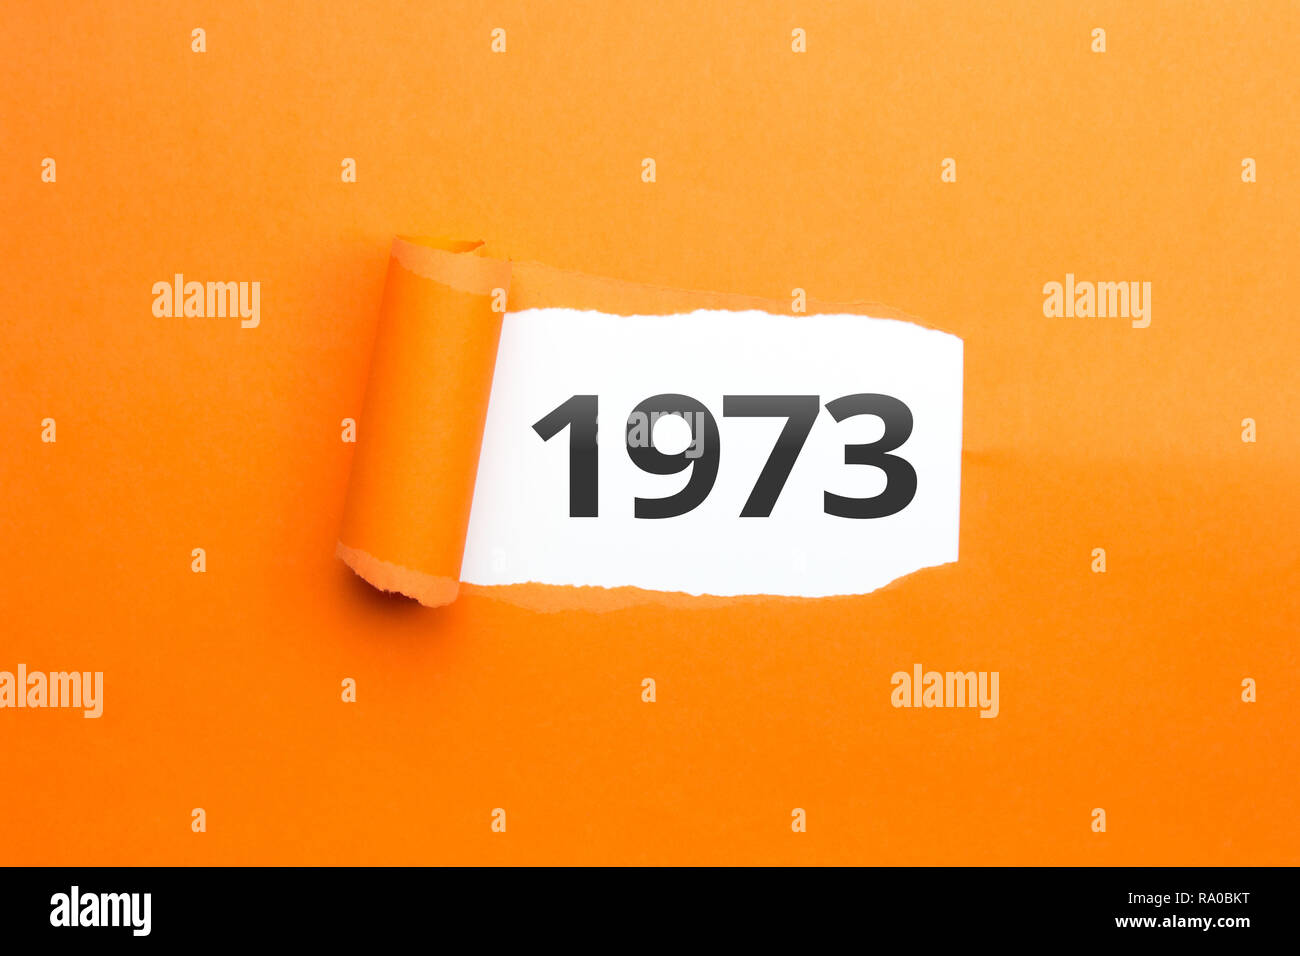 surprising Number / Year 1973 orange background Stock Photo